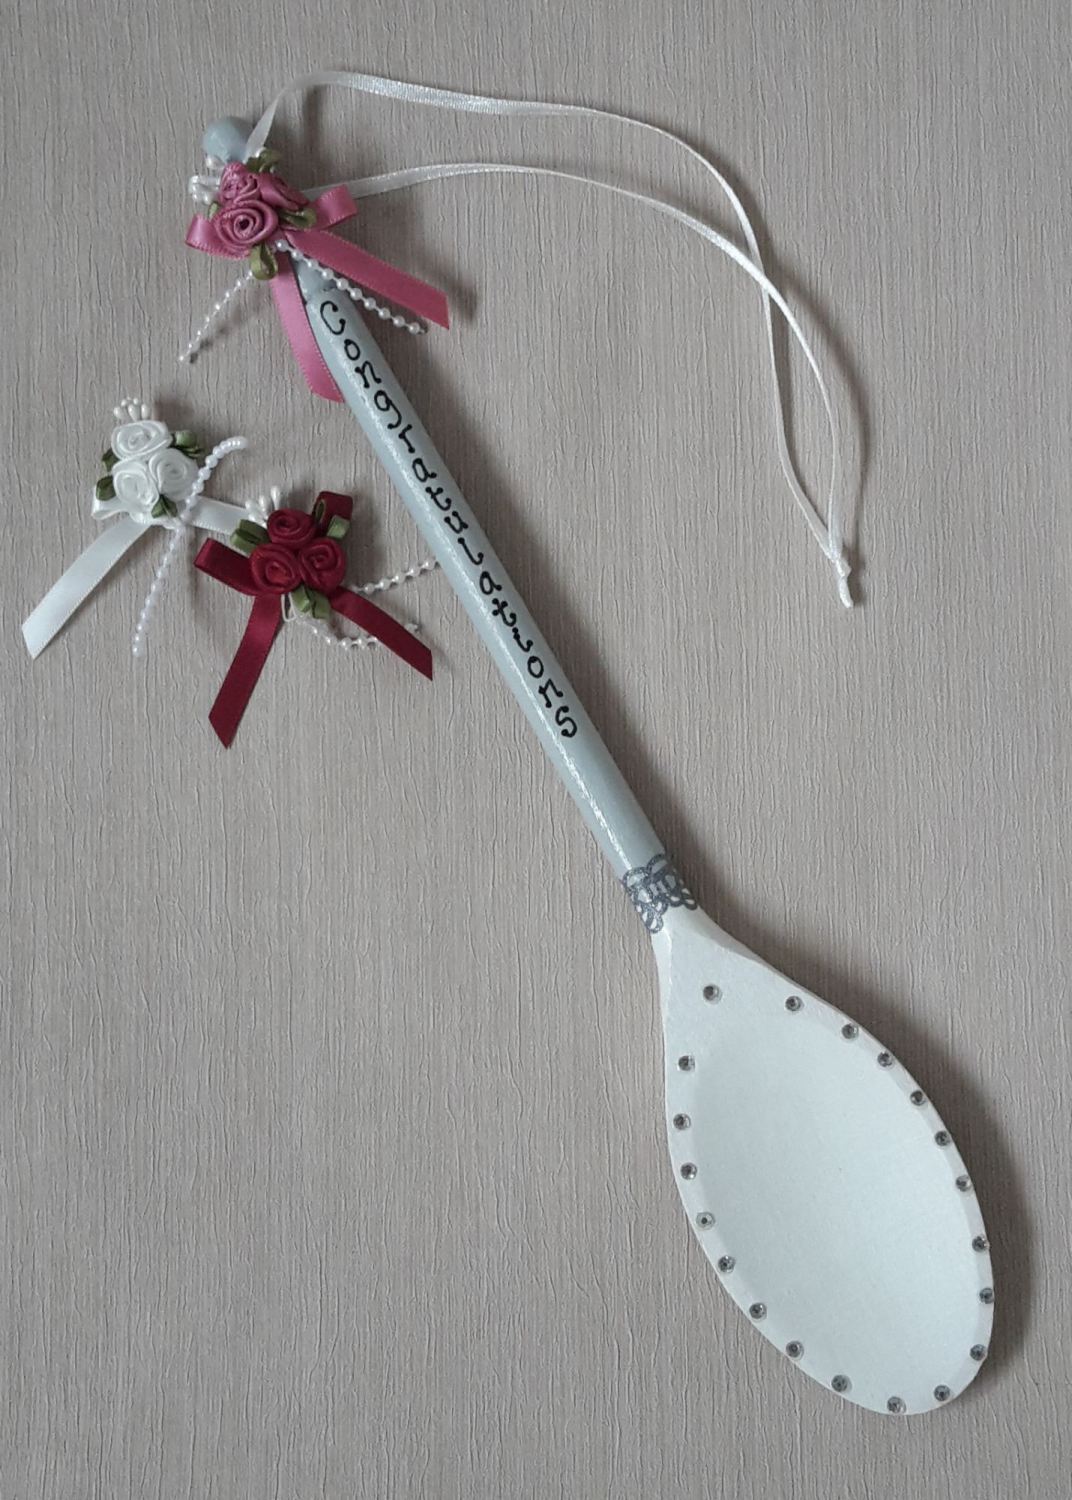 Personalised wedding wooden spoon gift (Painted)